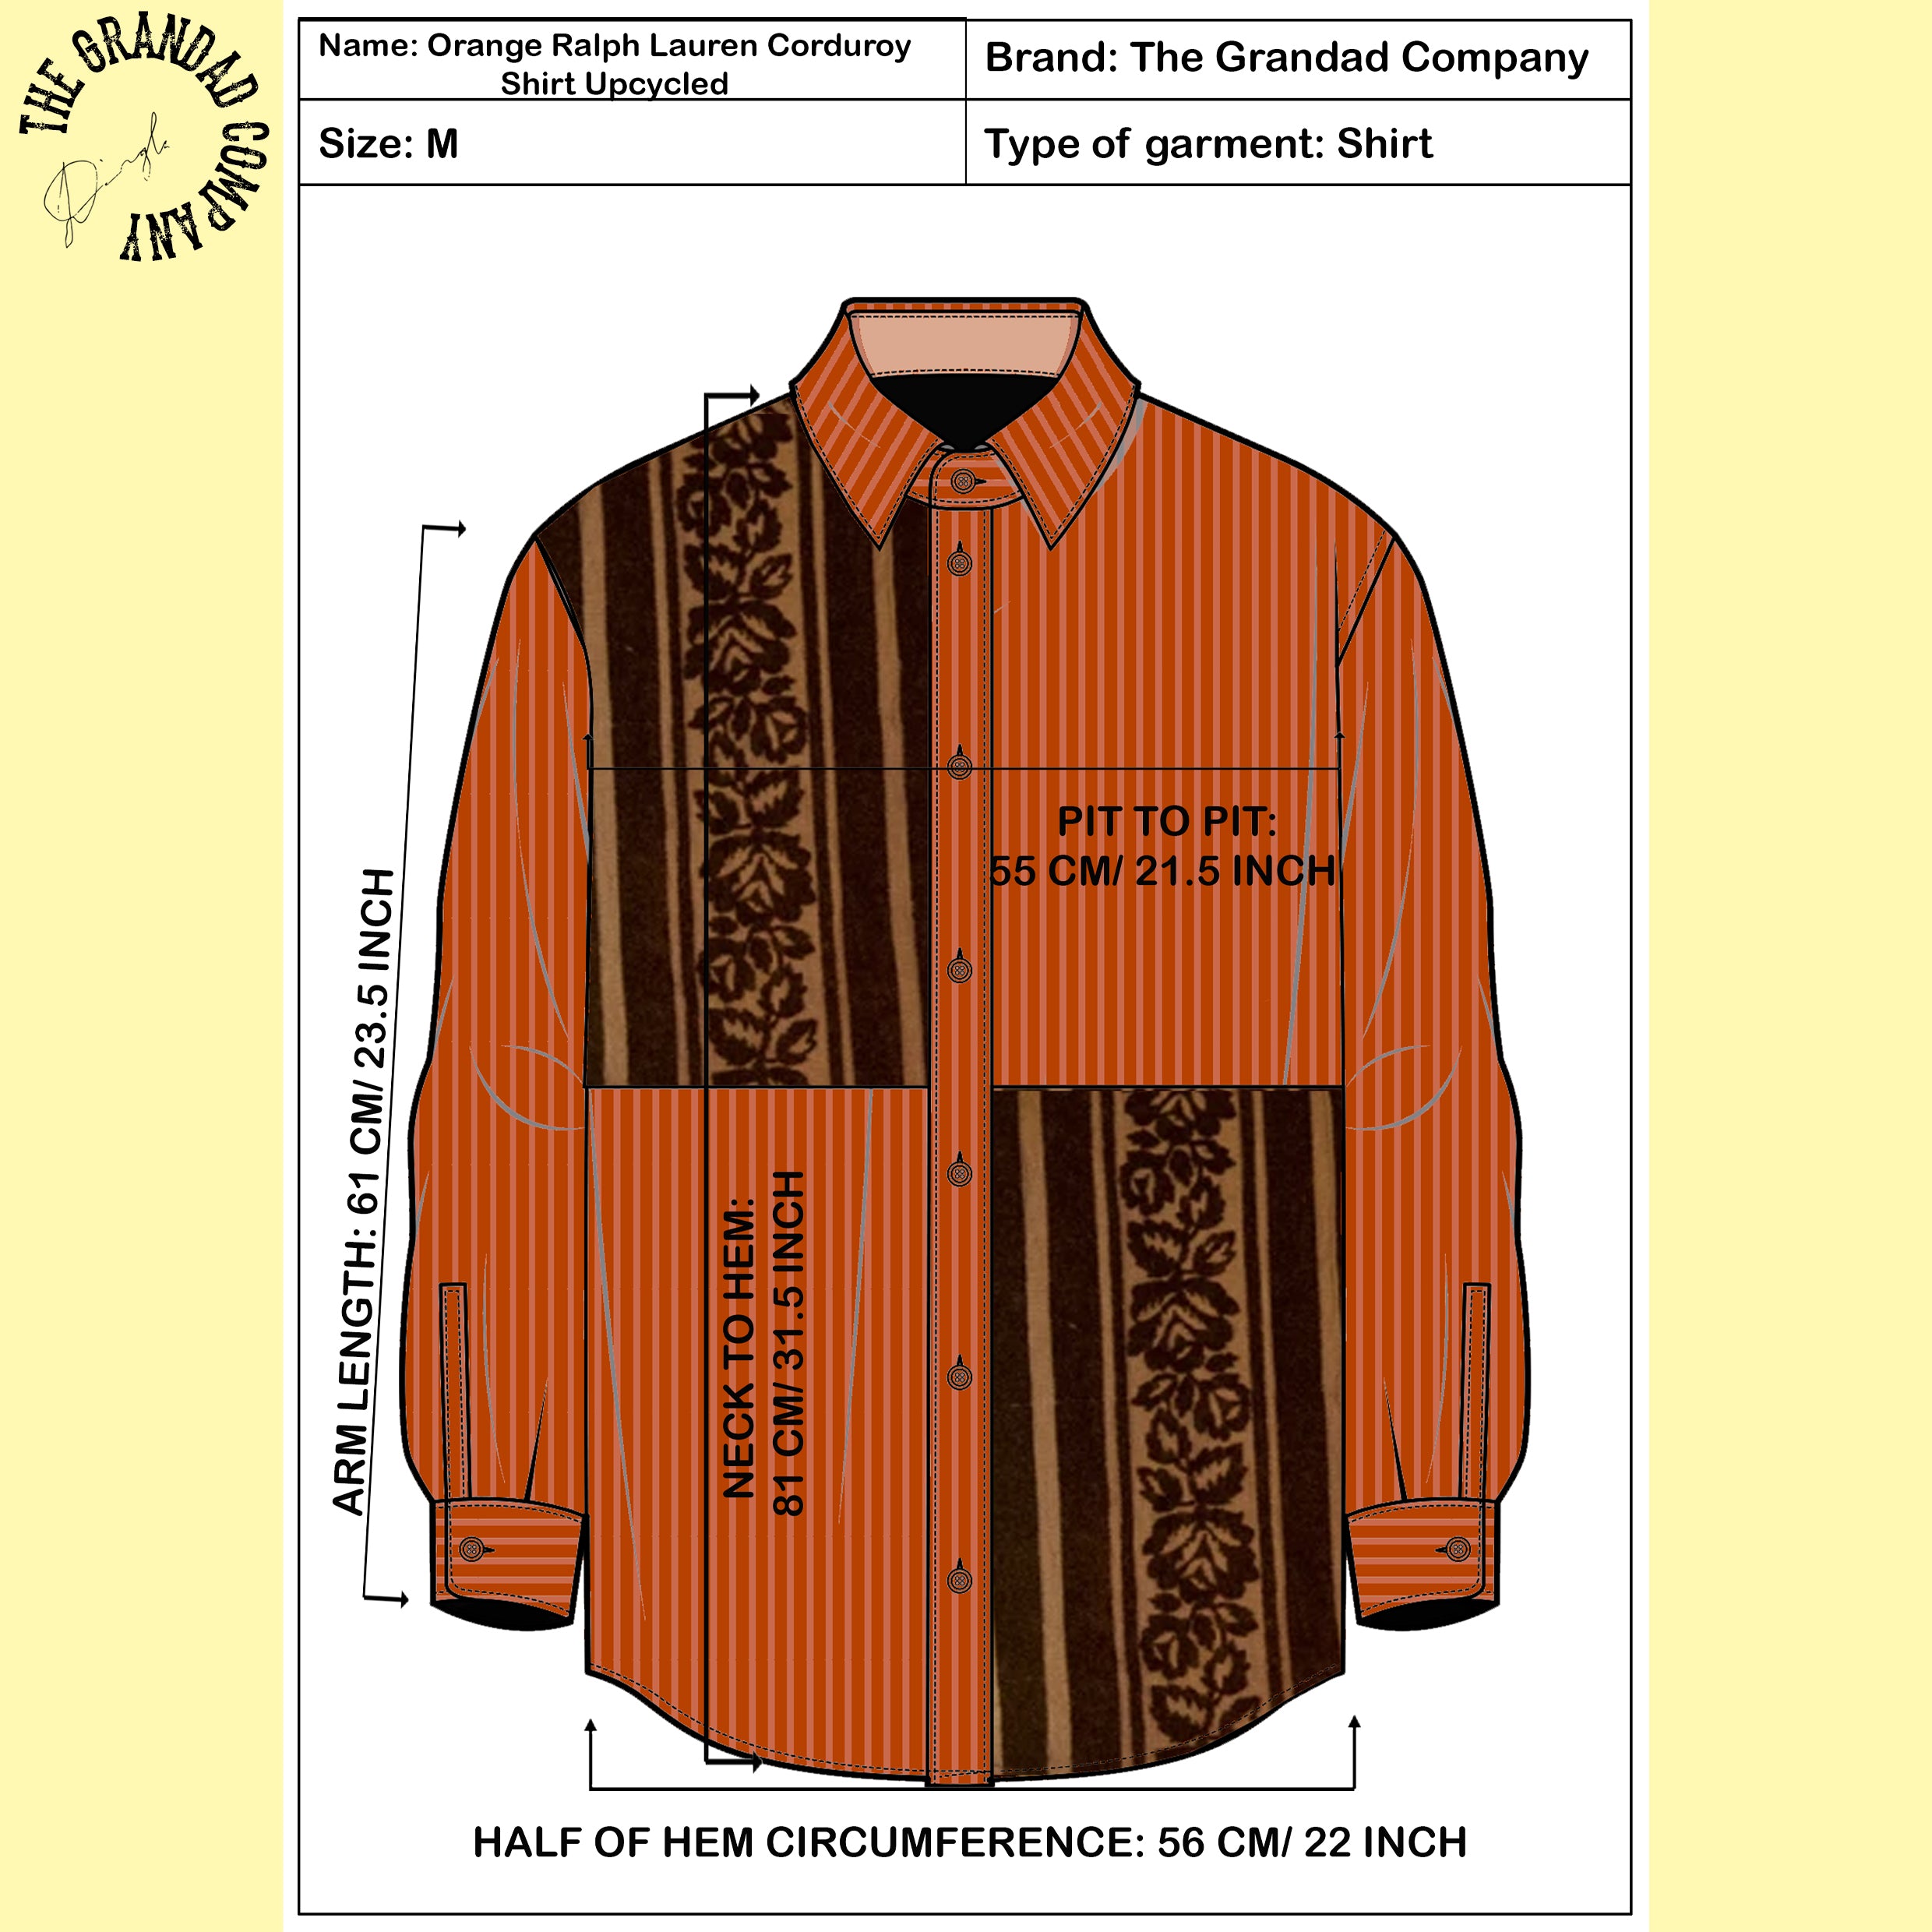 Orange Ralph Lauren Corduroy Shirt Upcycled